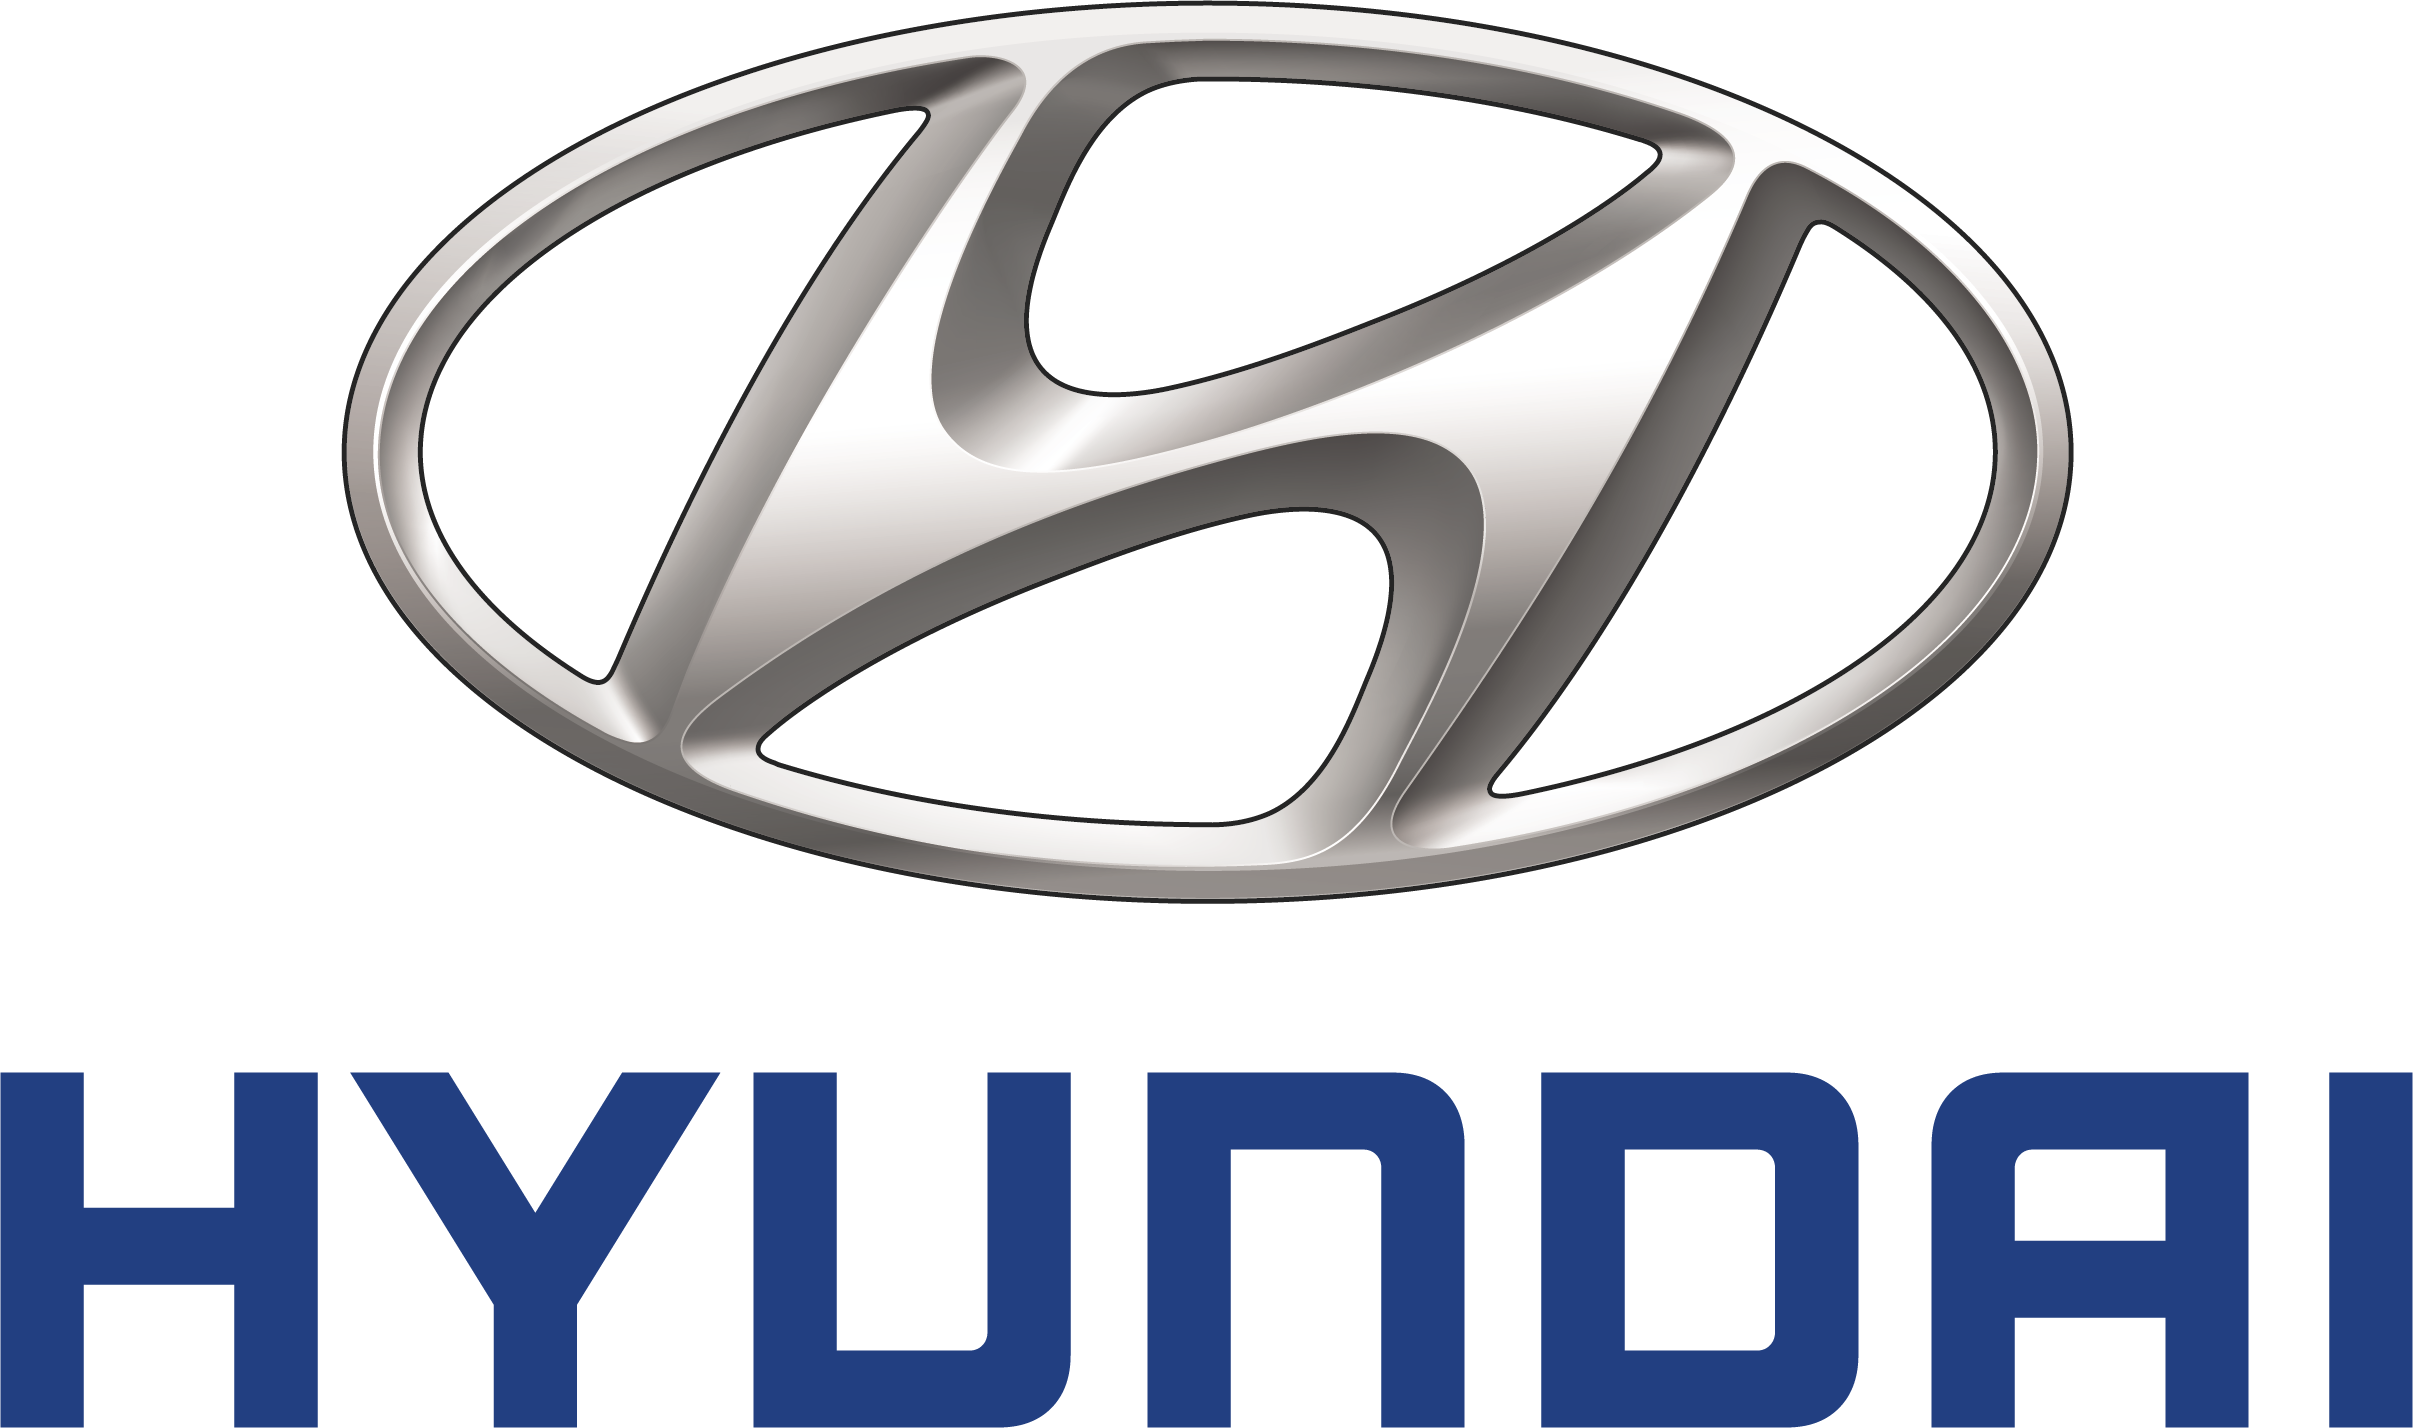 запчасти Hyundai